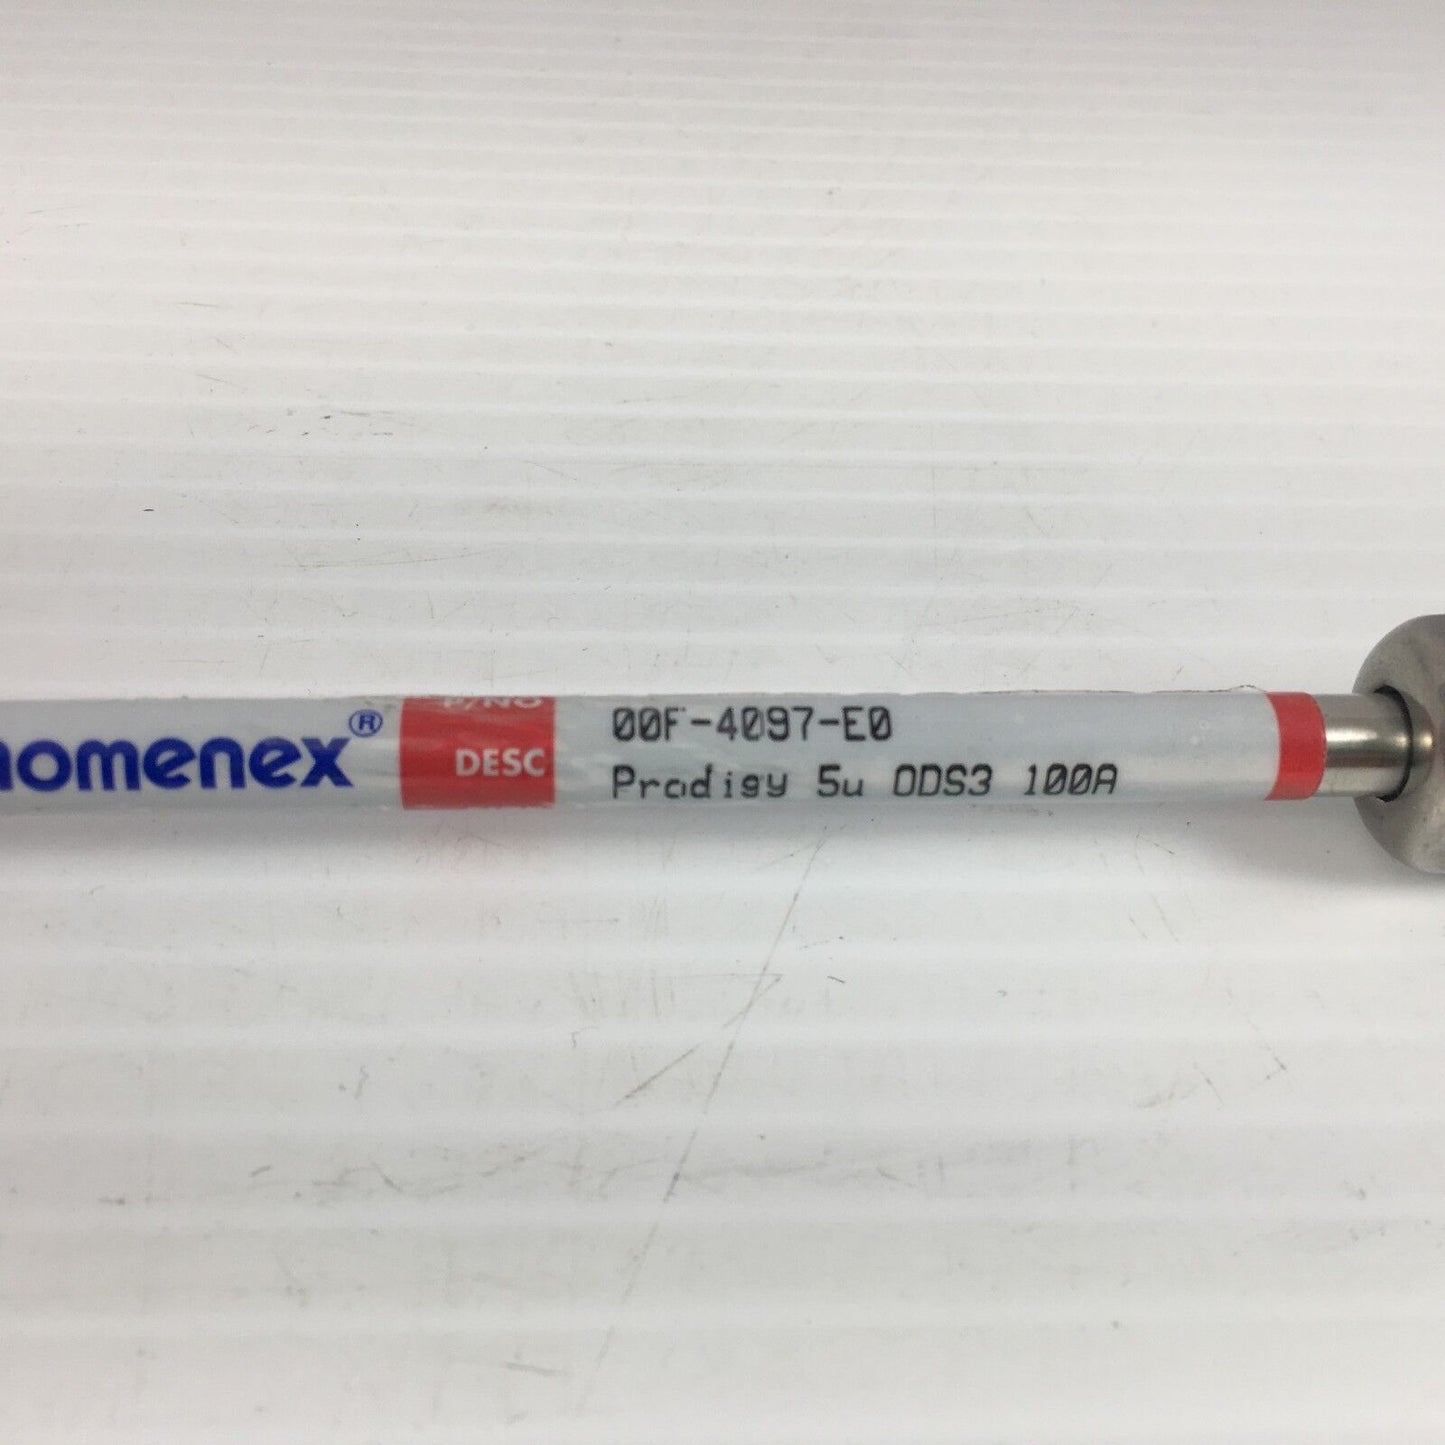 Phenomenex Prodigy ODS, 150 x 4.6mm, 5u, 100A HPLC column, 00F-4097-E0